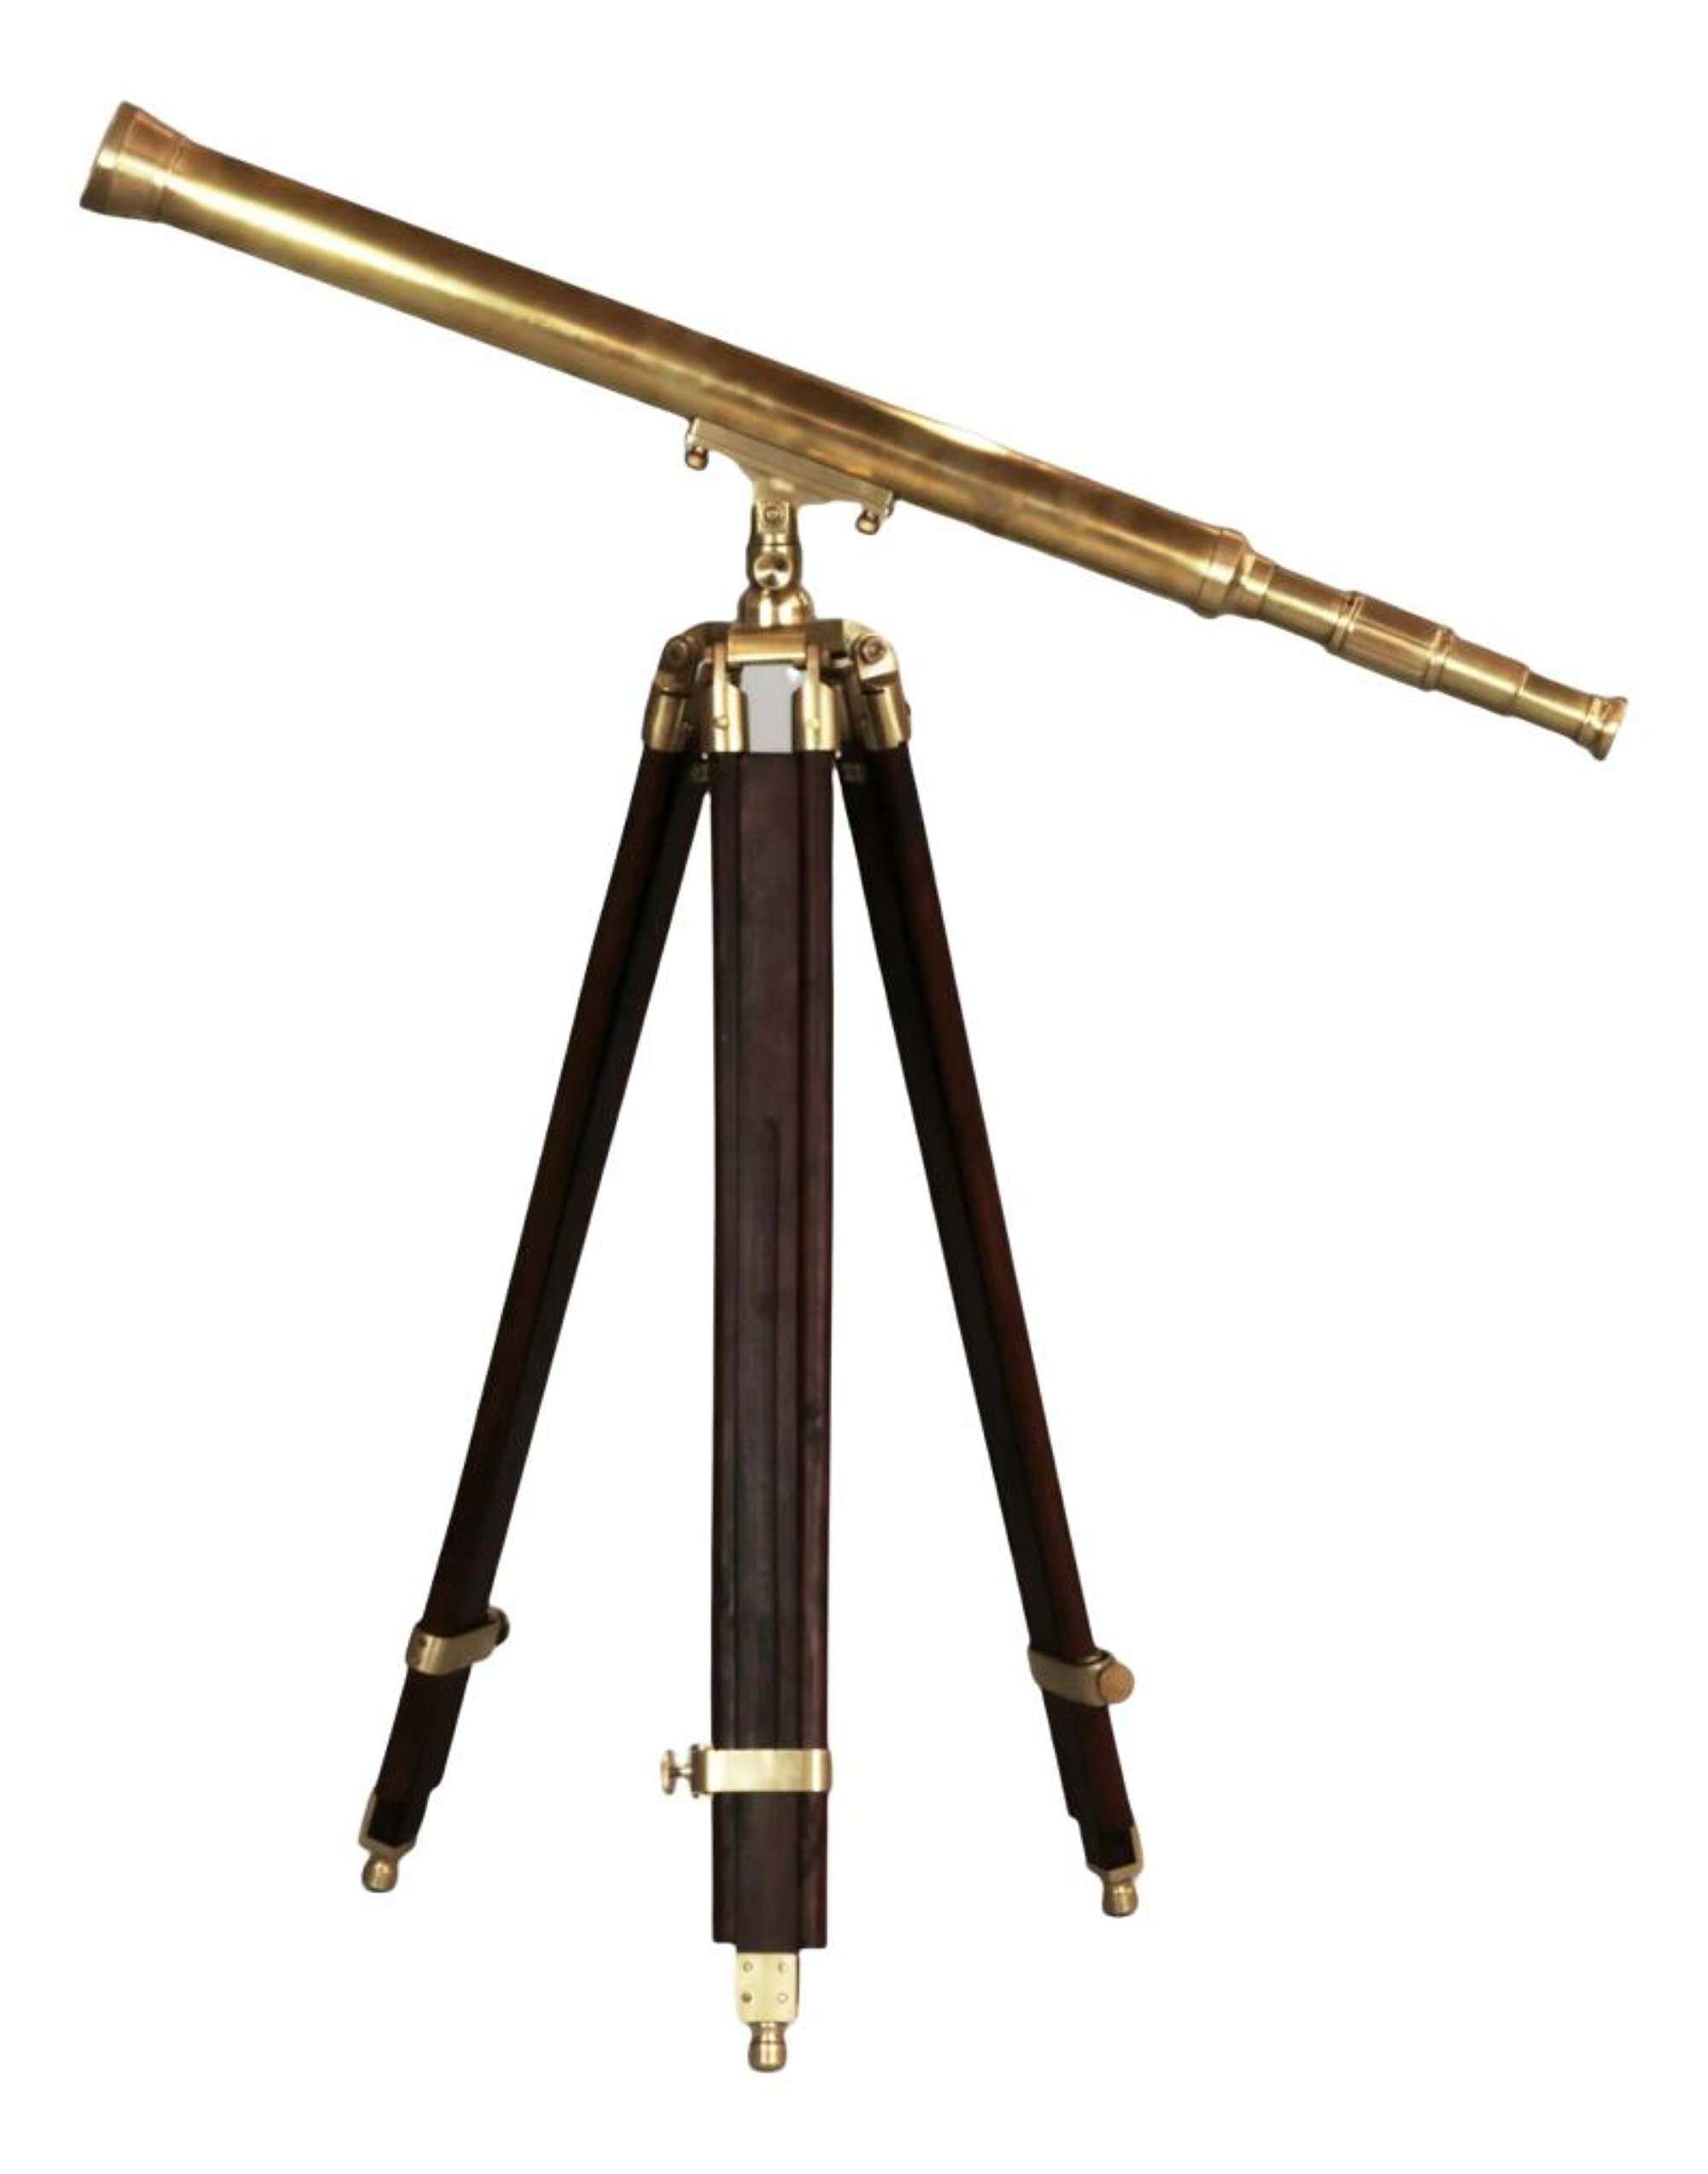 English Telescope from W & J. George Ltd